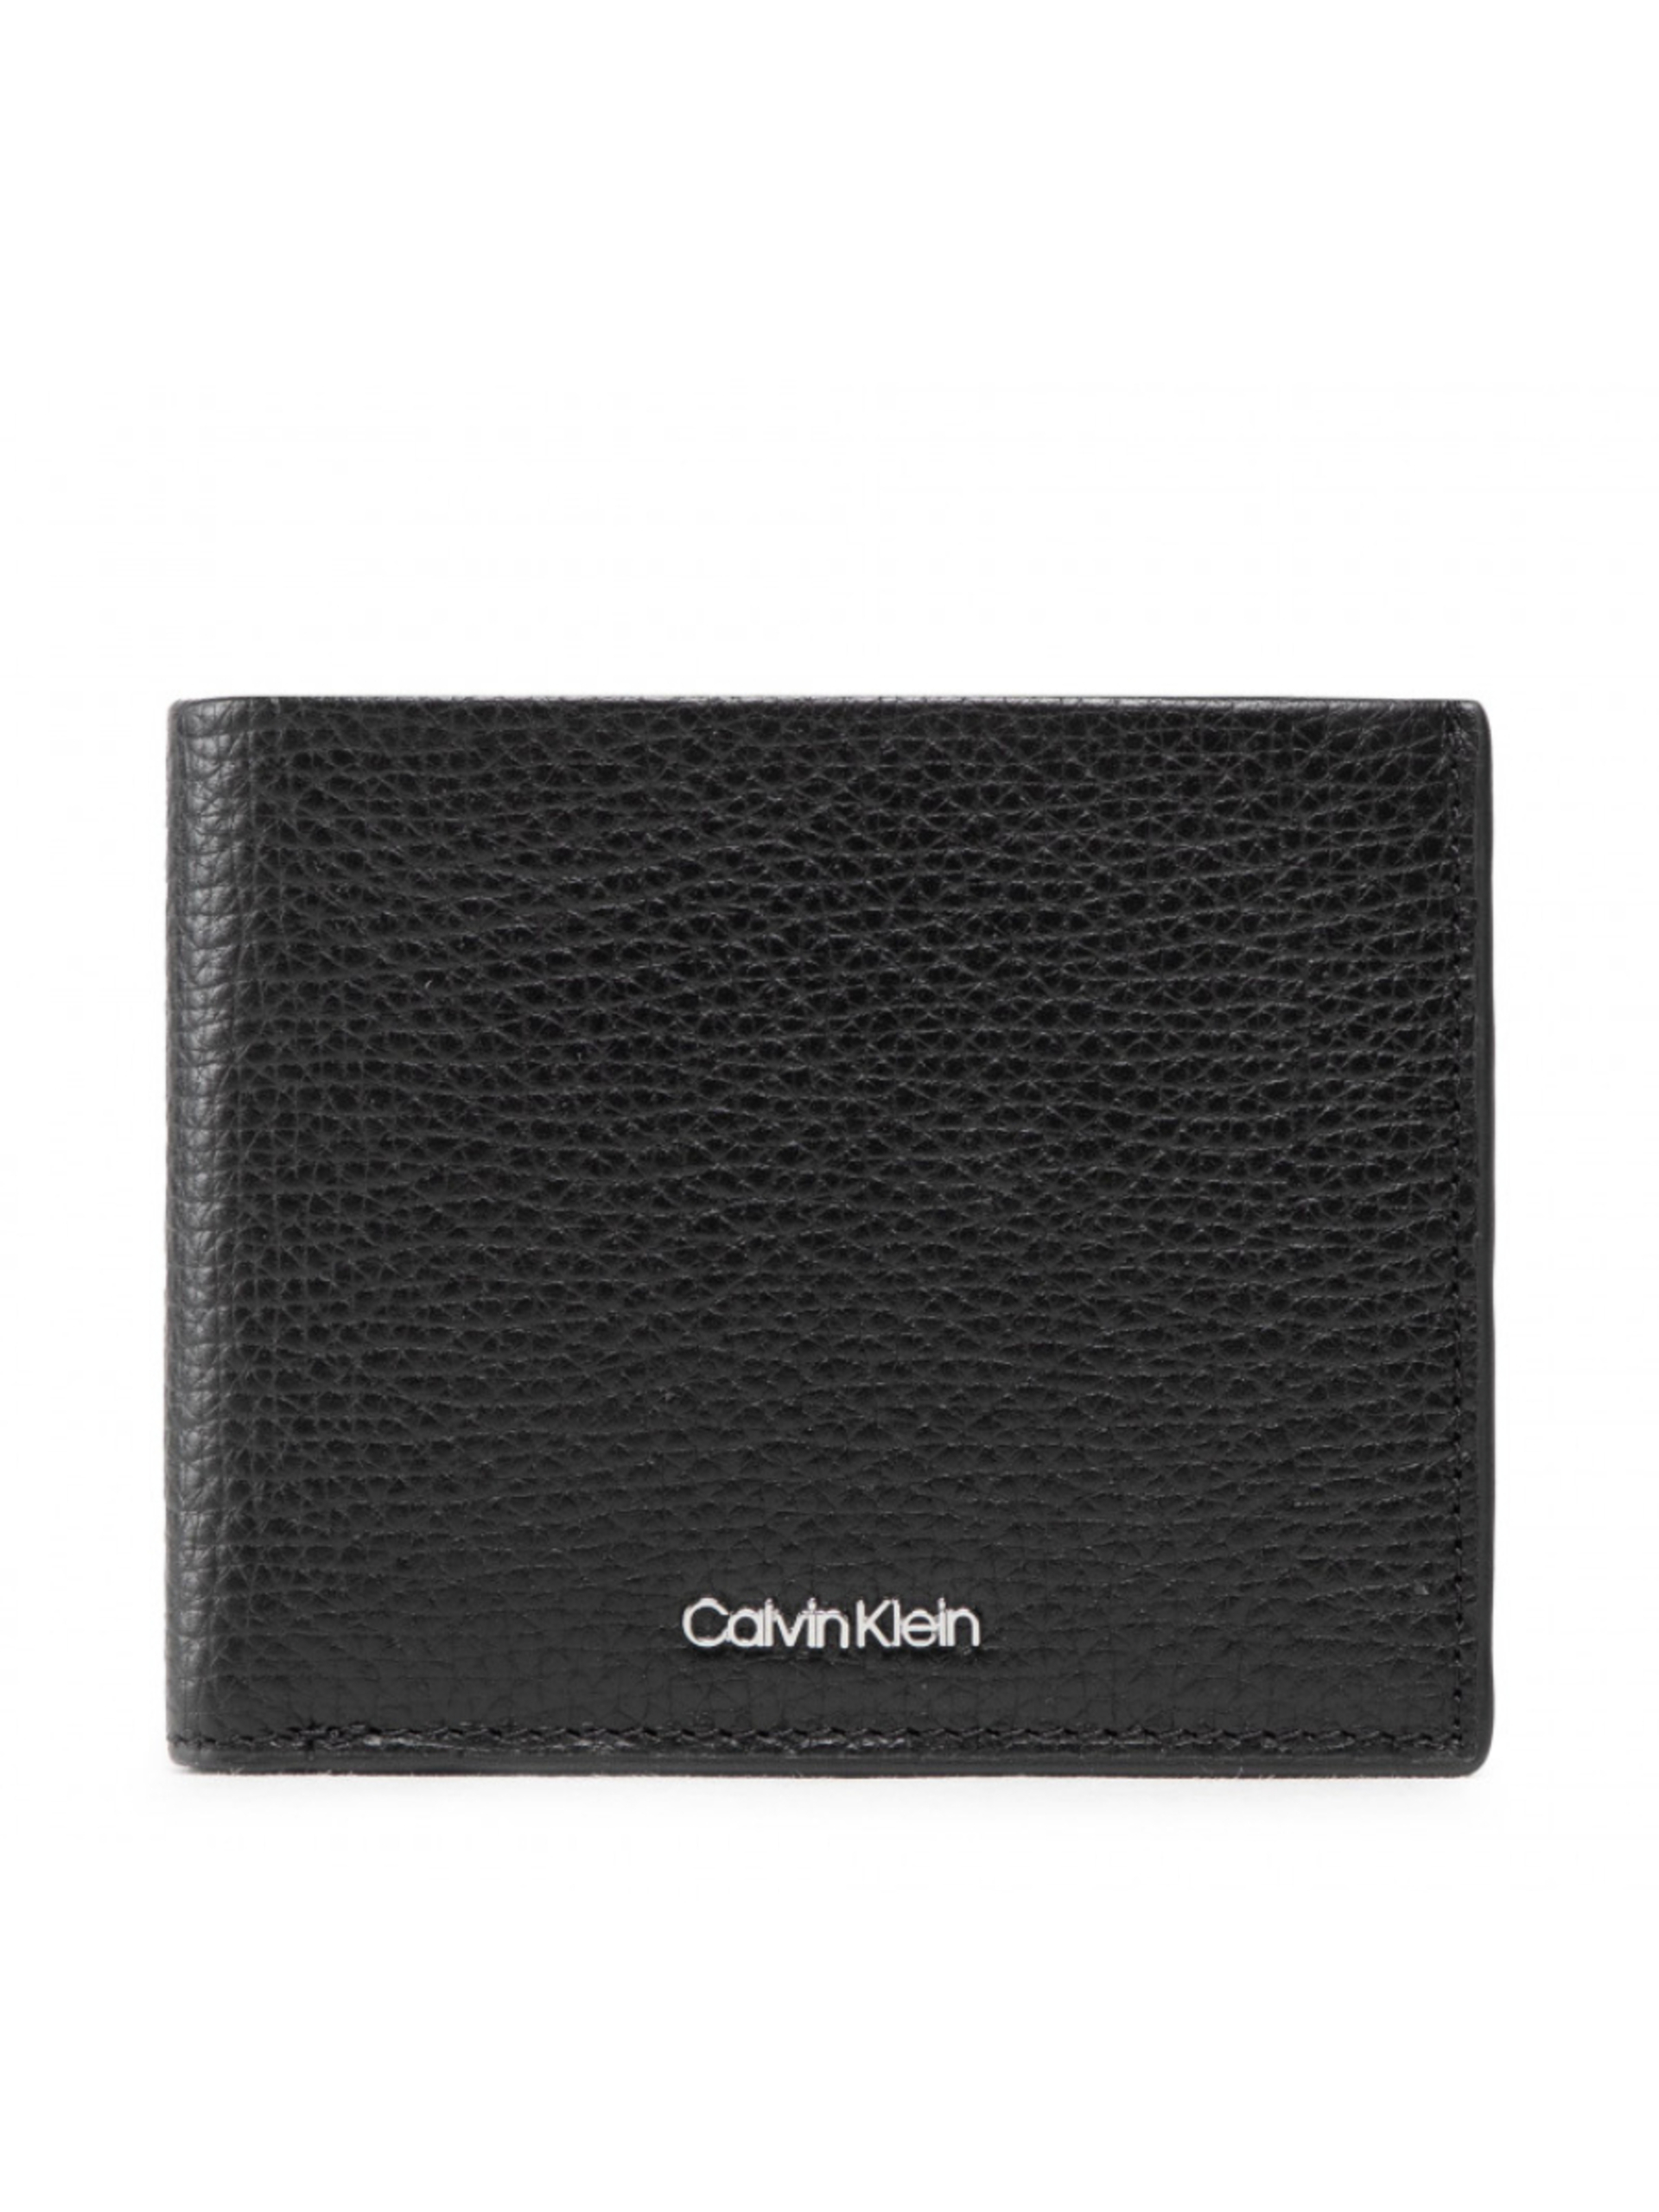 Calvin Klein pánská černá peněženka - OS (BAX)